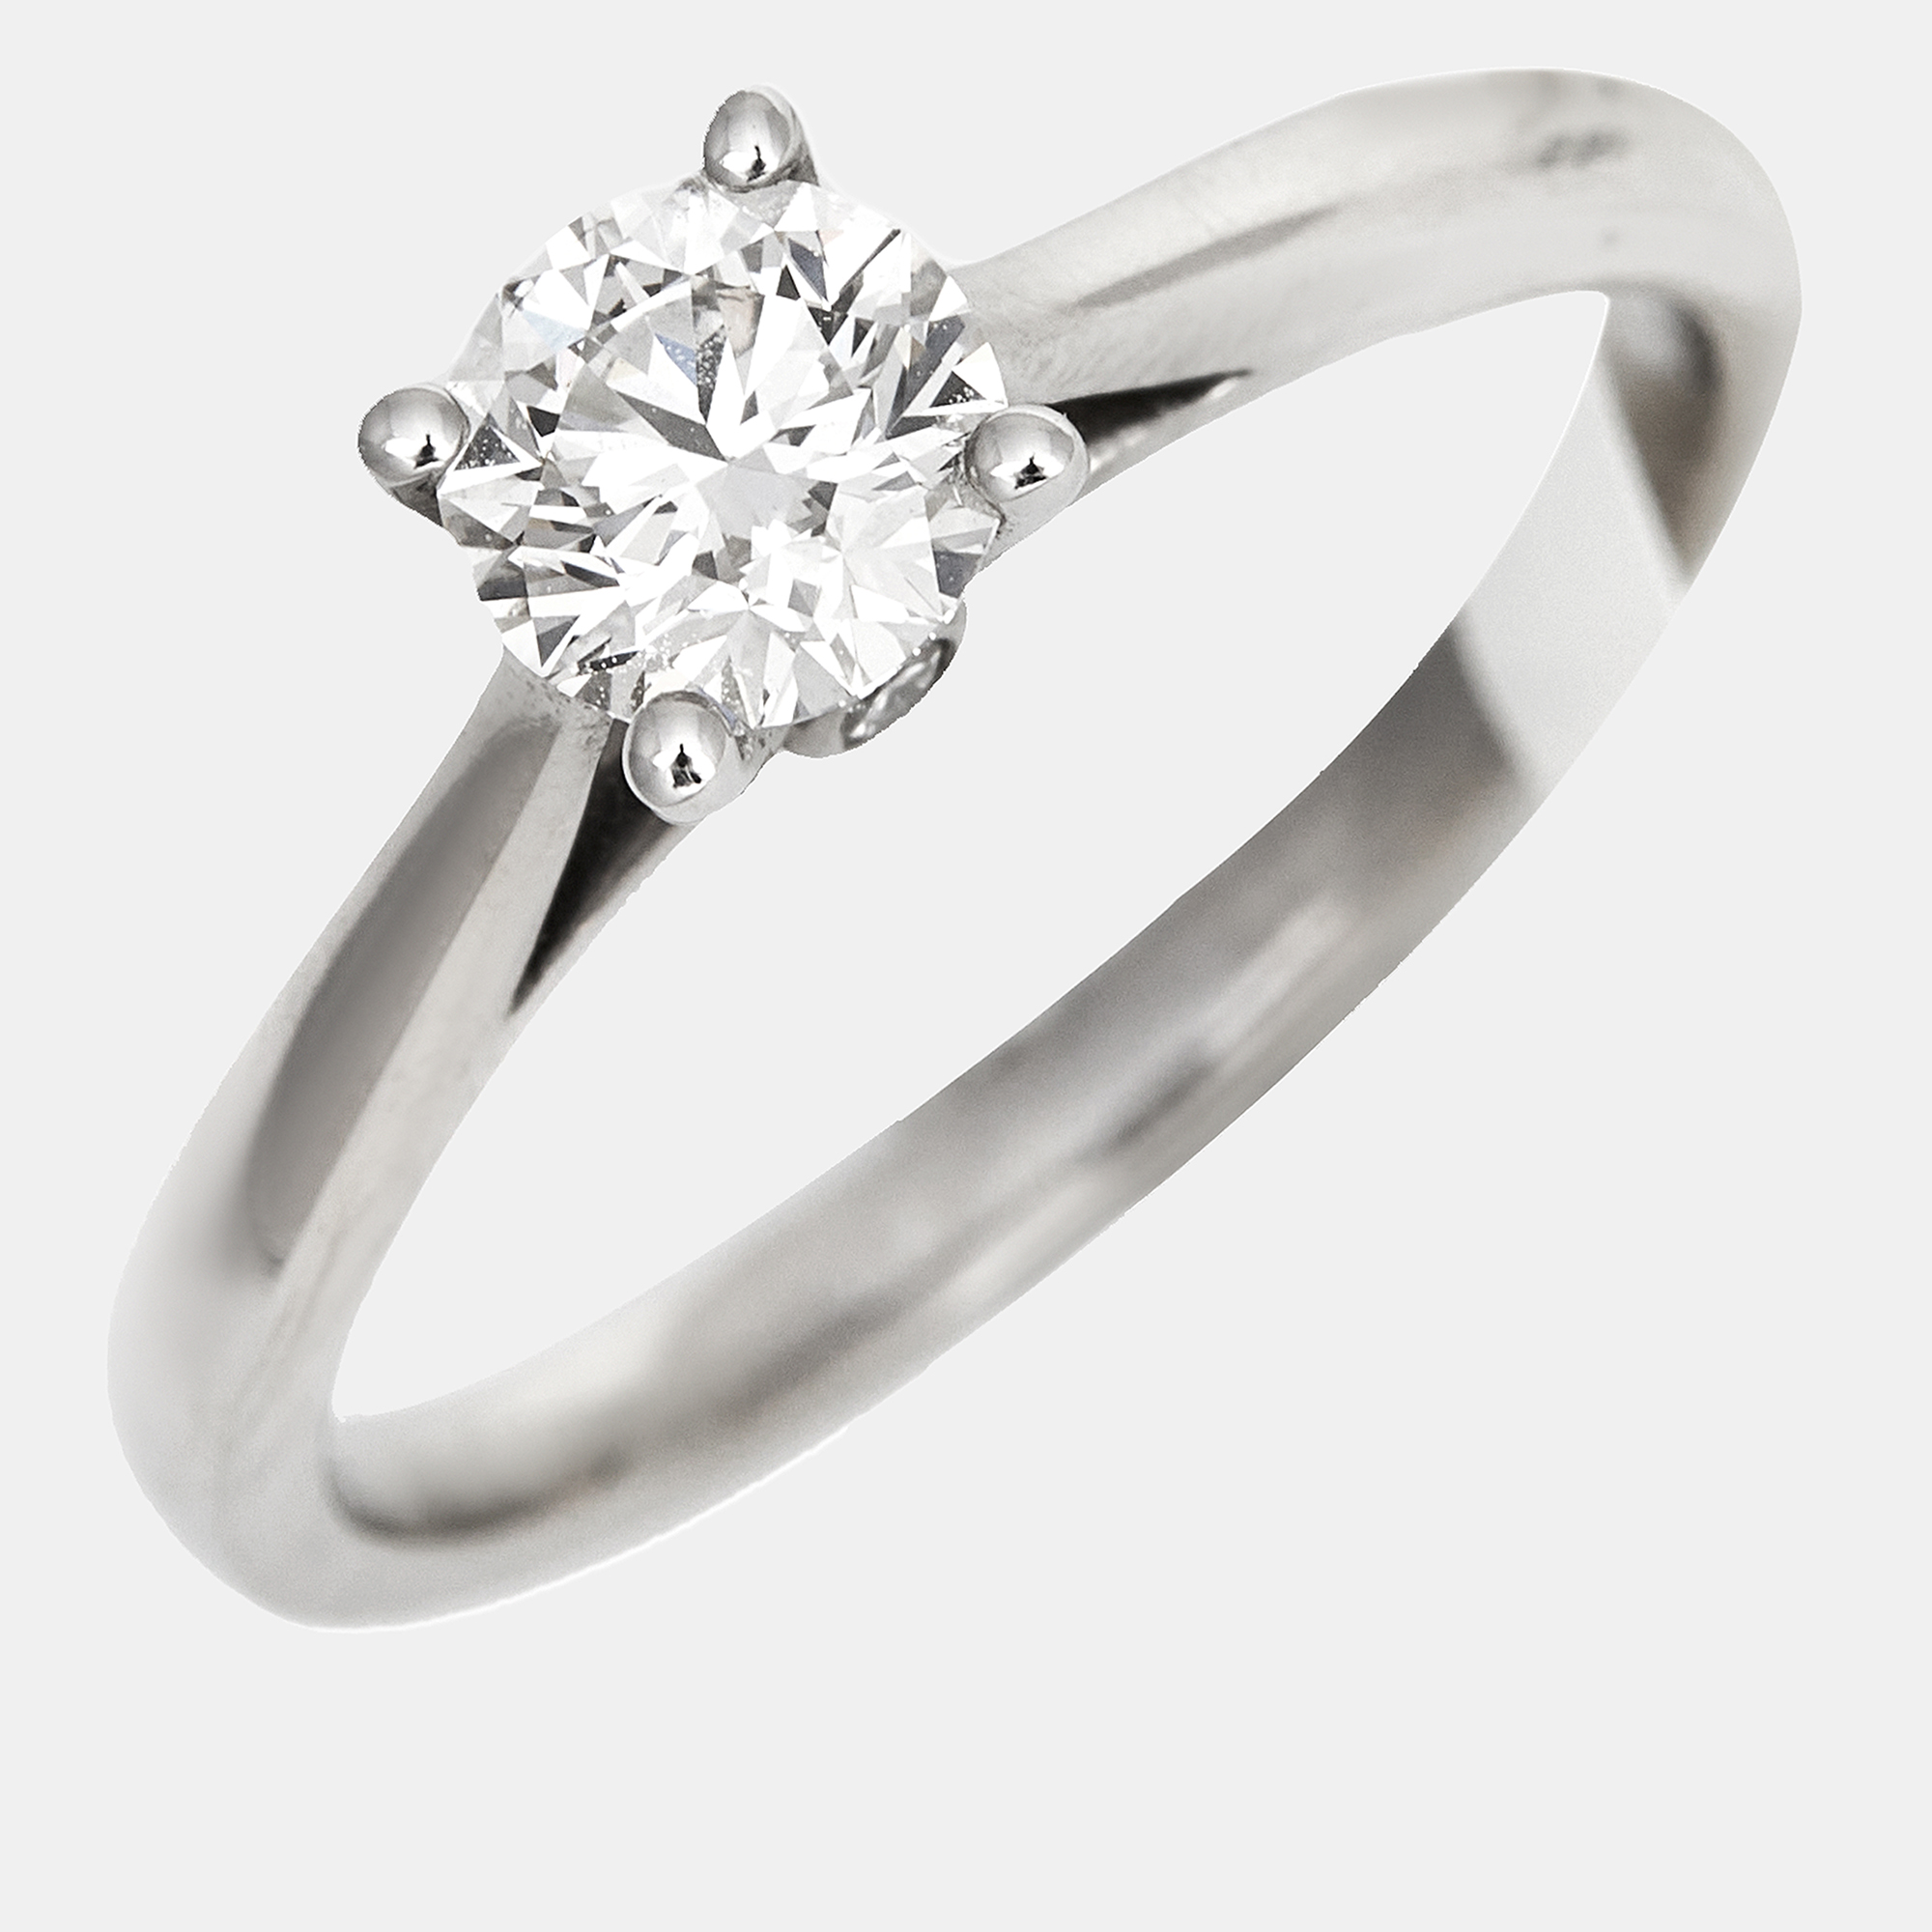 The diamond edit solitare diamond 0.55 ct 18k white gold wedding ring size 54